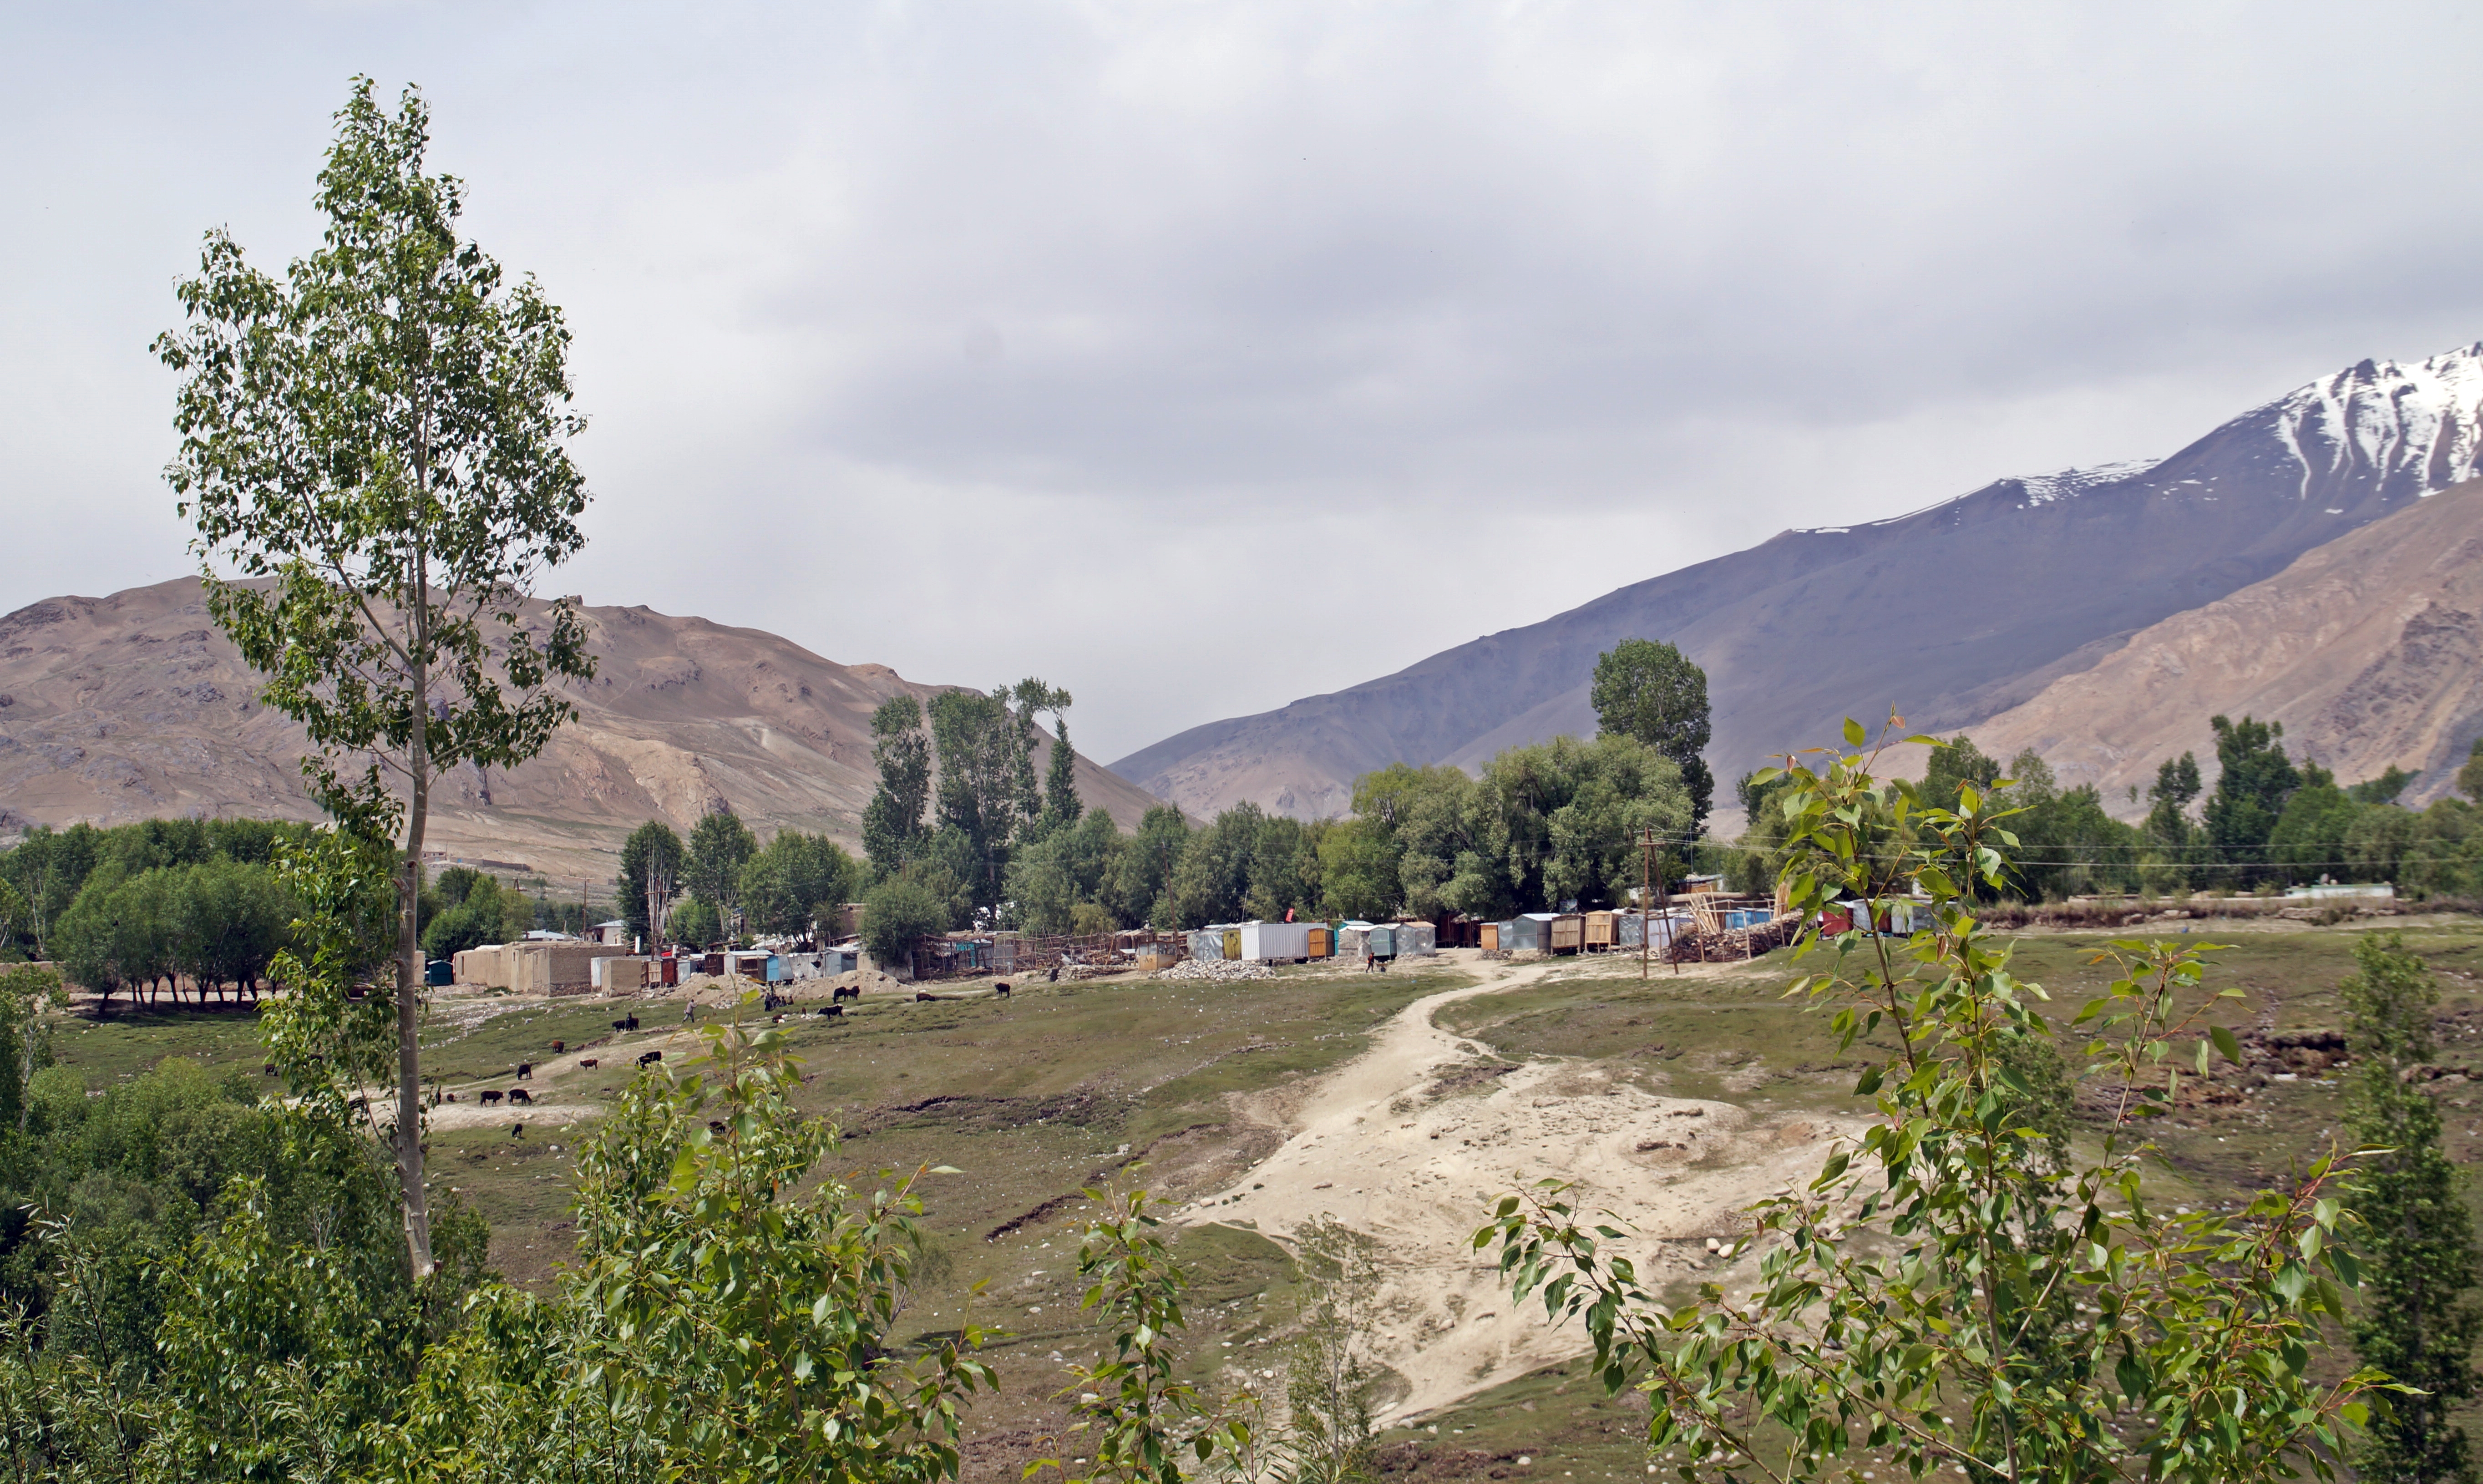 Sultan Eshkashim, a border town near the Wakhan Corridor